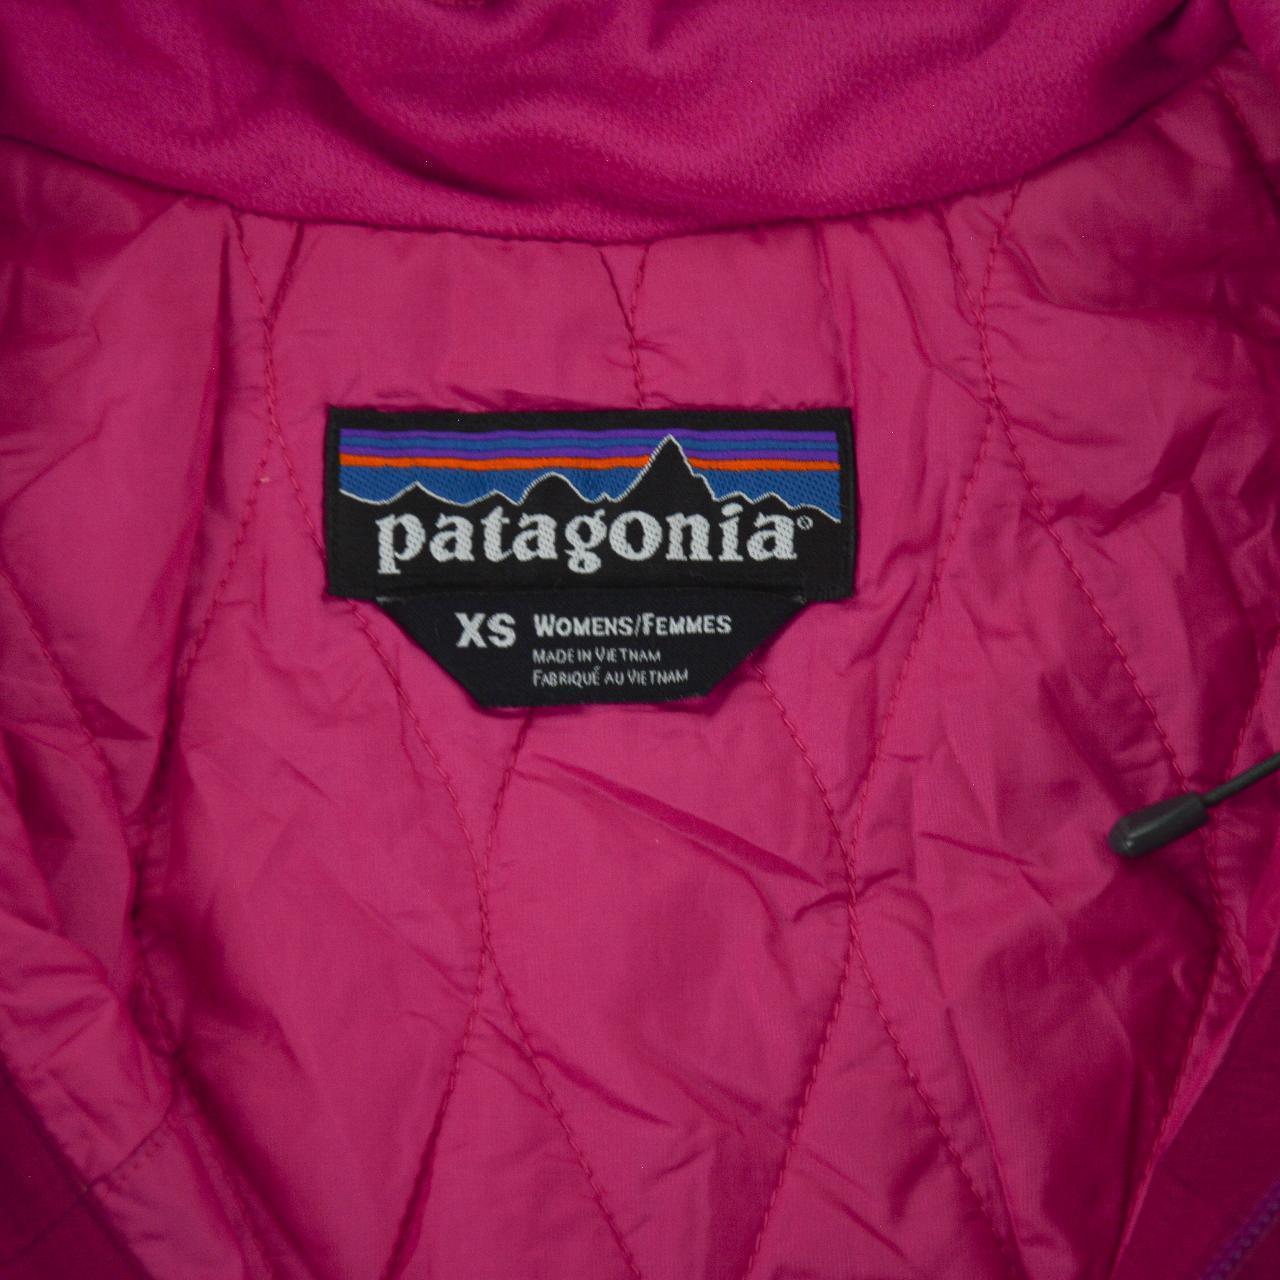 Vintage Patagonia Zip Up Jacket Women's Size XS - Known Source